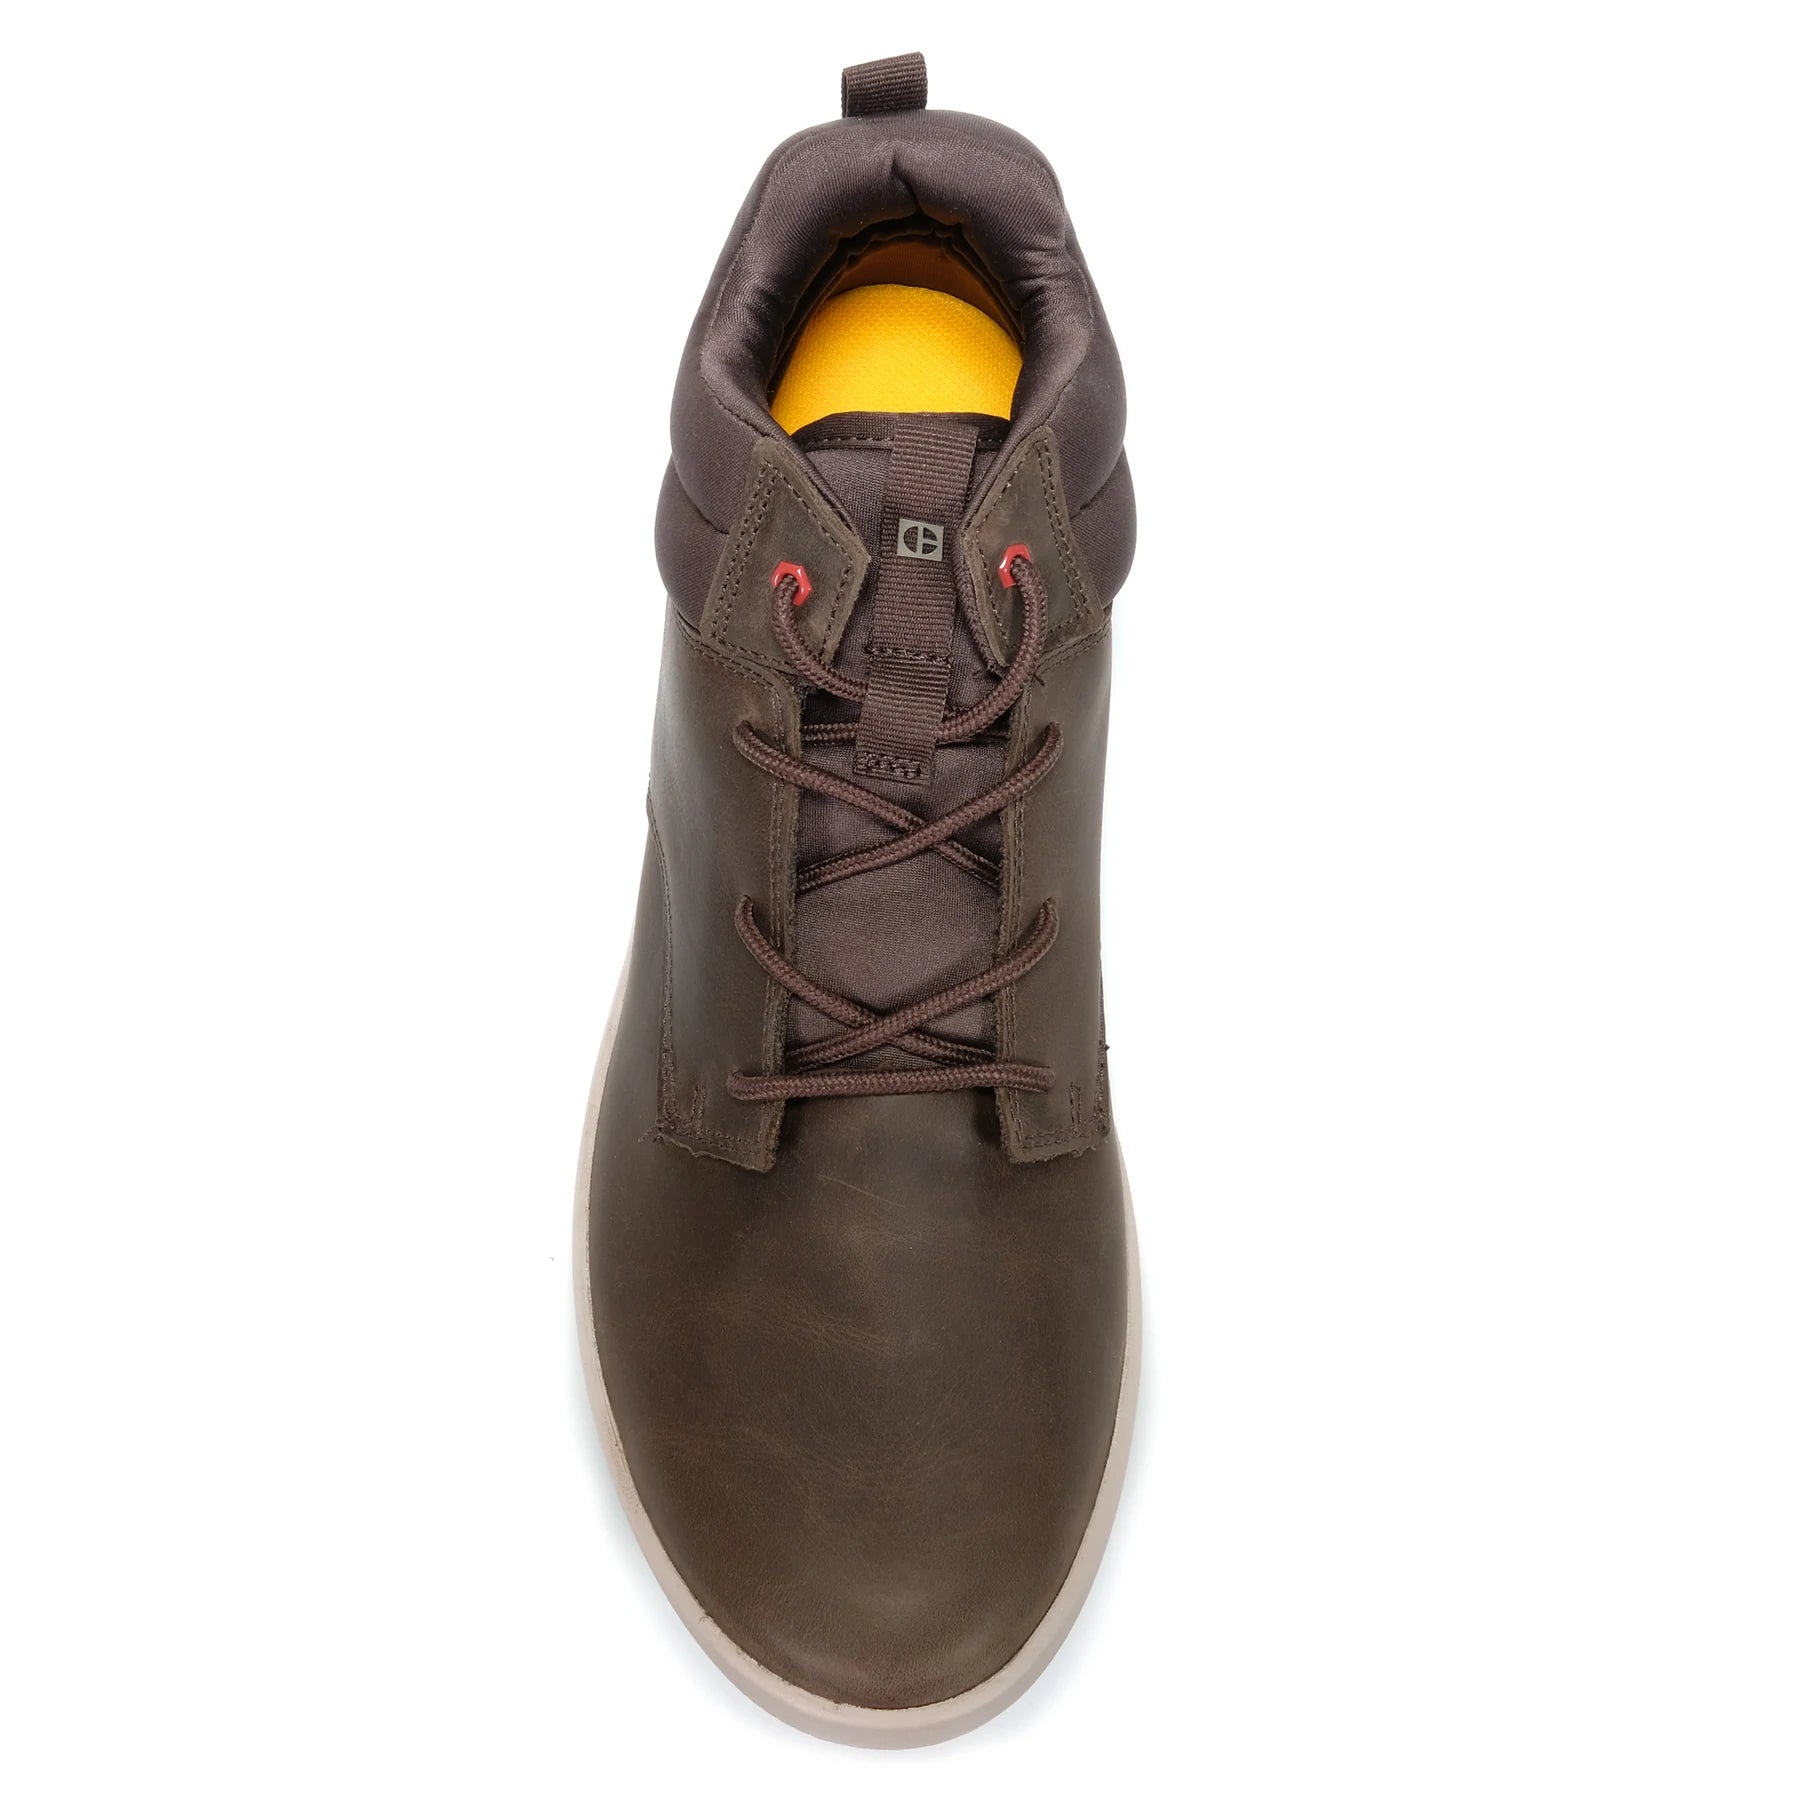 Proxy Hi - shoe&me - Caterpillar - Boot - Boots, Mens, Winter